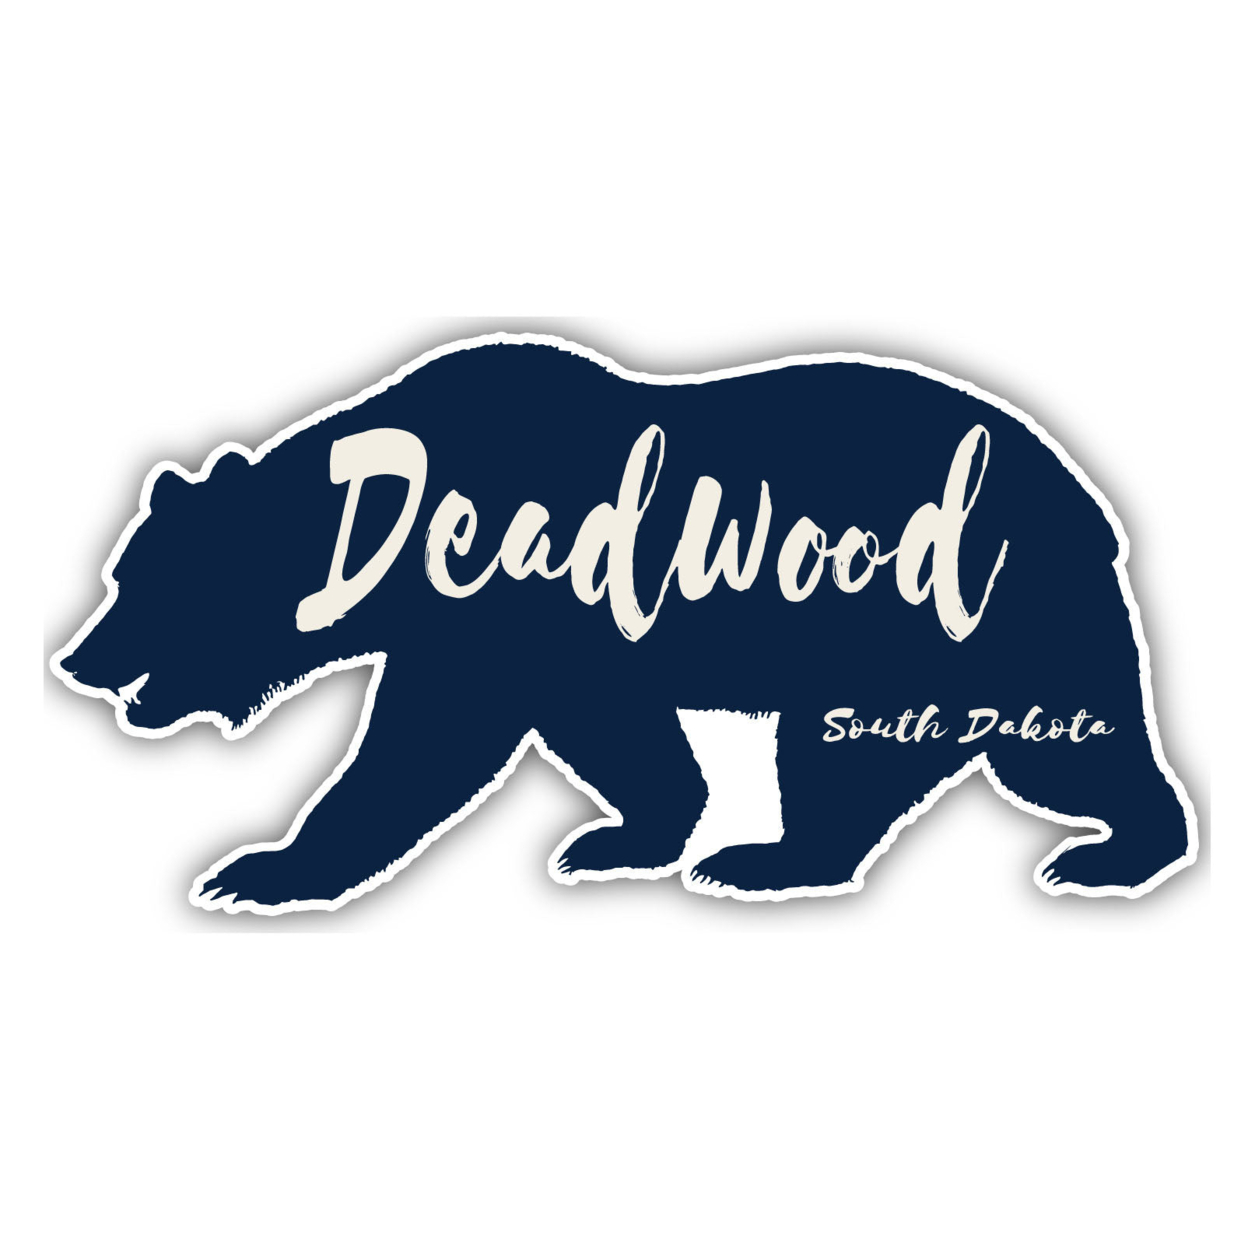 Deadwood South Dakota Souvenir Decorative Stickers (Choose Theme And Size) - 4-Pack, 4-Inch, Bear